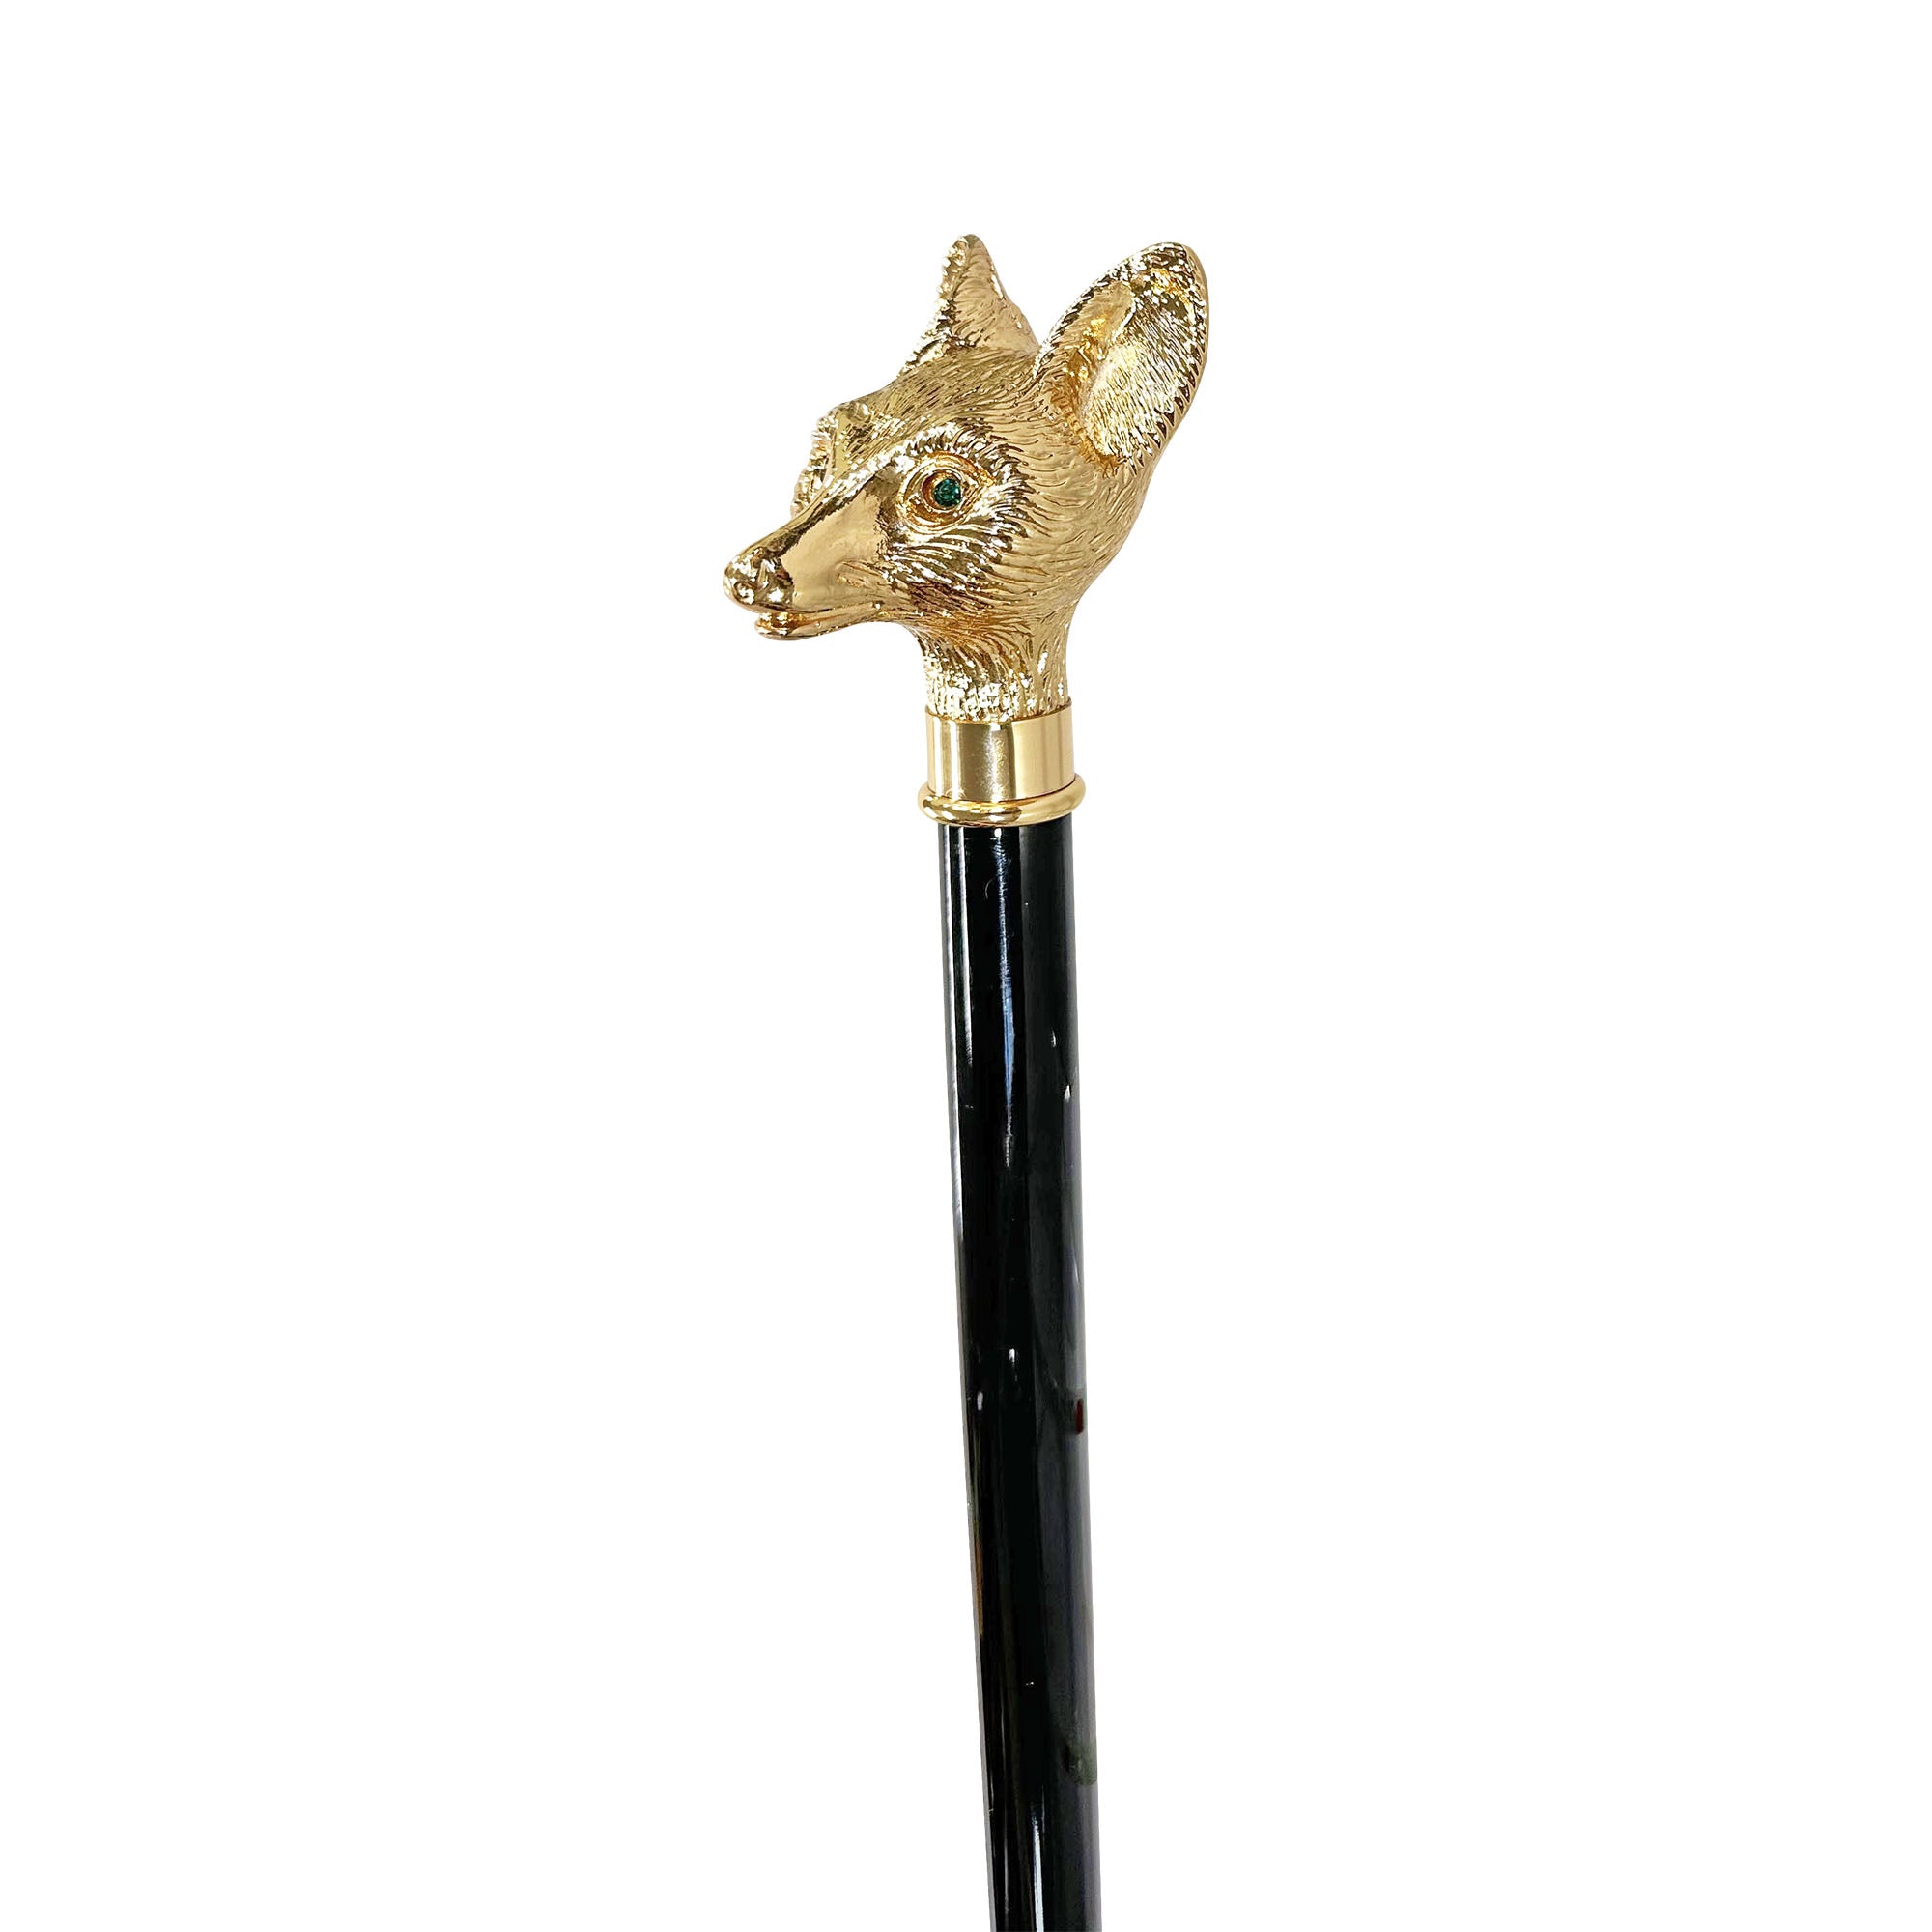 Handmade Fox Walking stick - 24K gold-plated